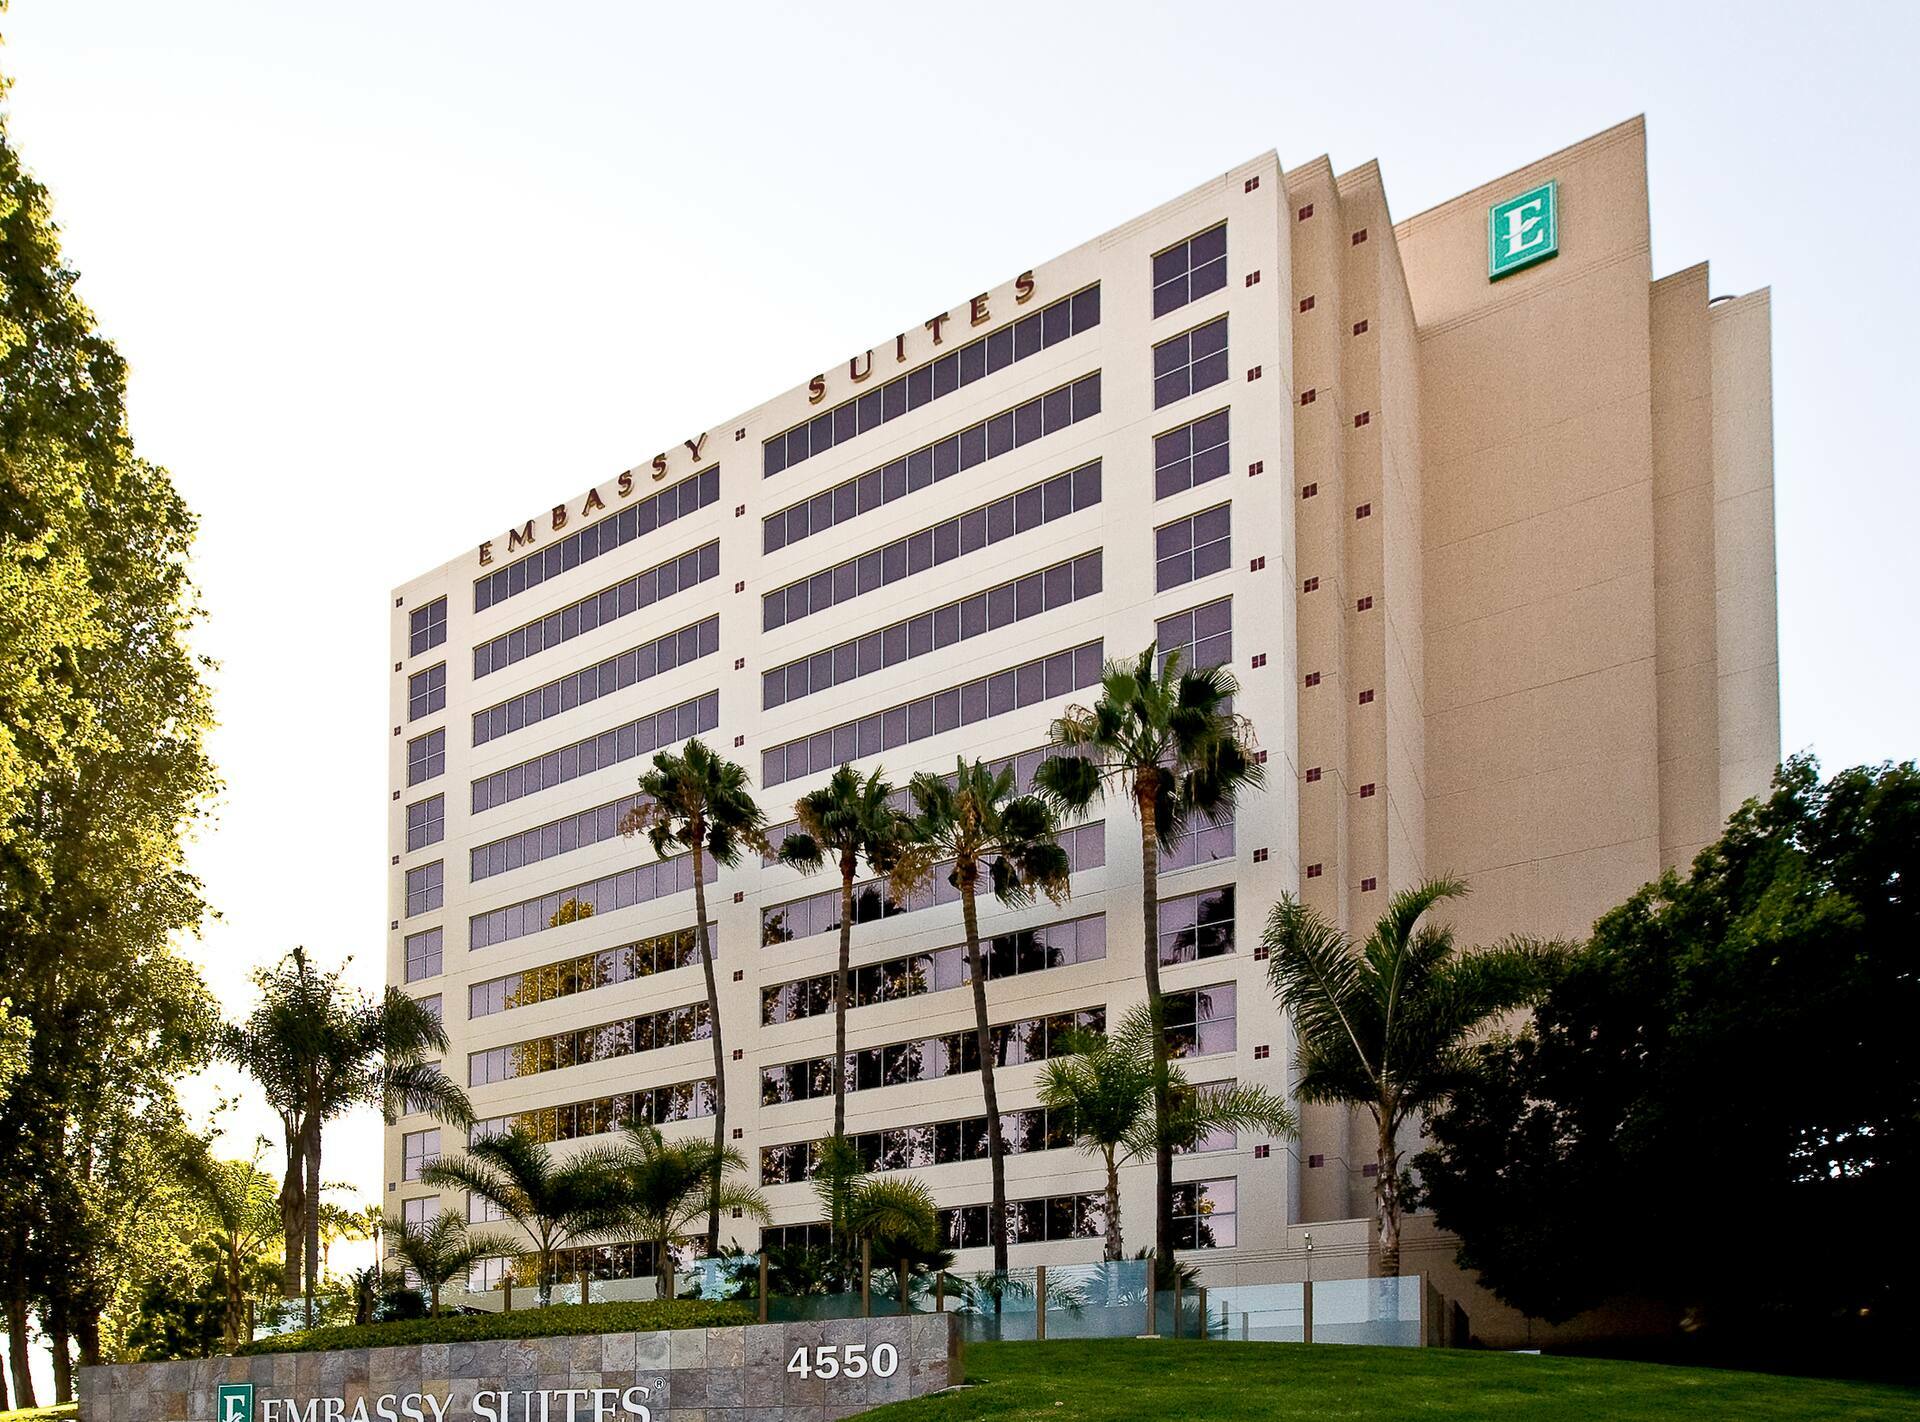 Photo of Embassy Suites by Hilton San Diego La Jolla, San Diego, CA